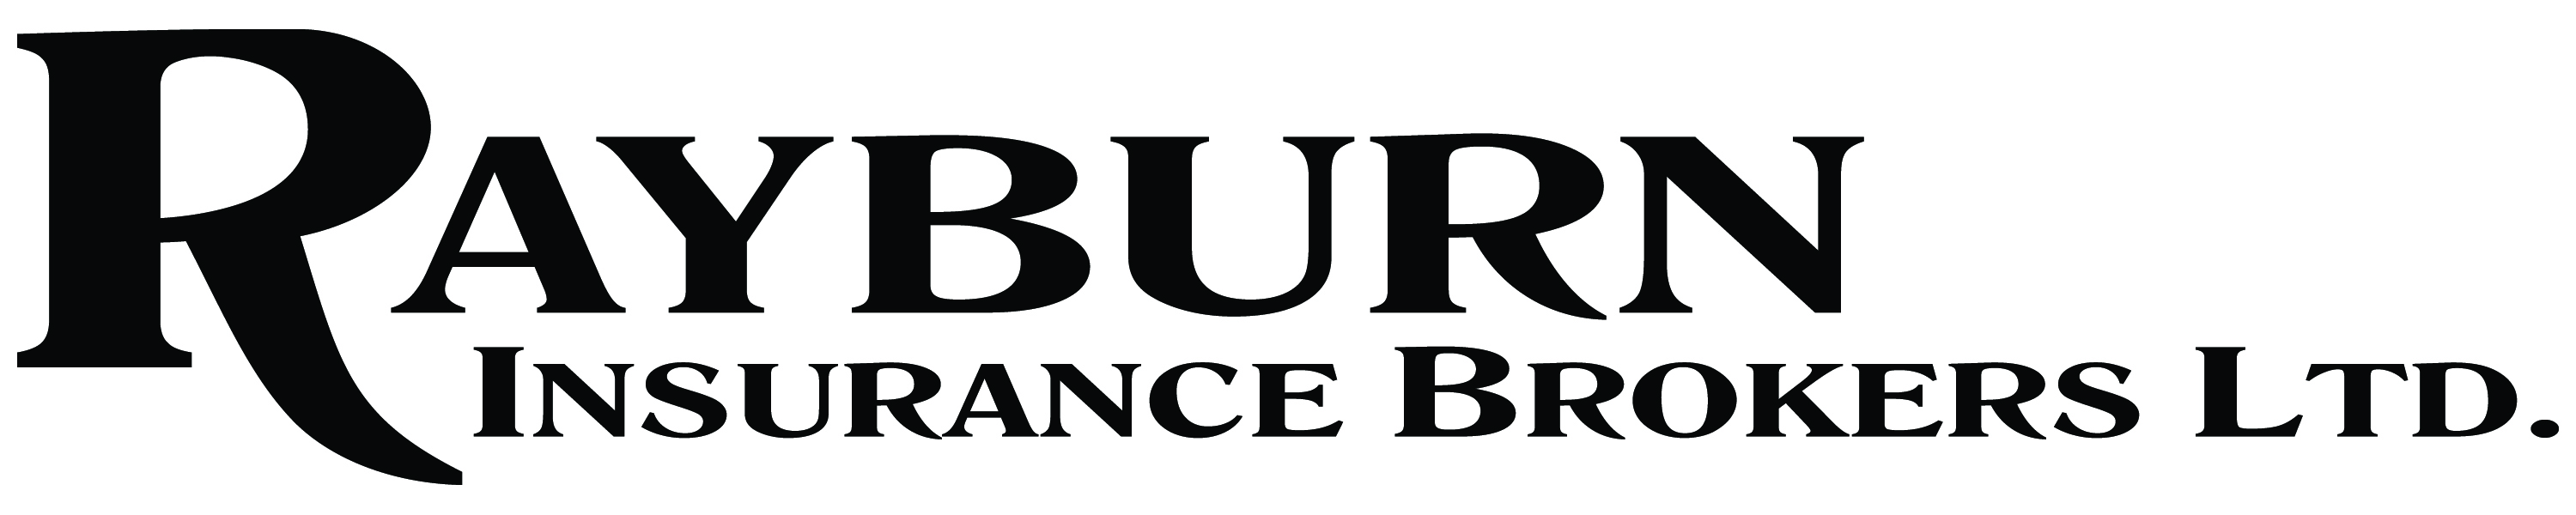 Rayburn Insurance Brokers Ltd.